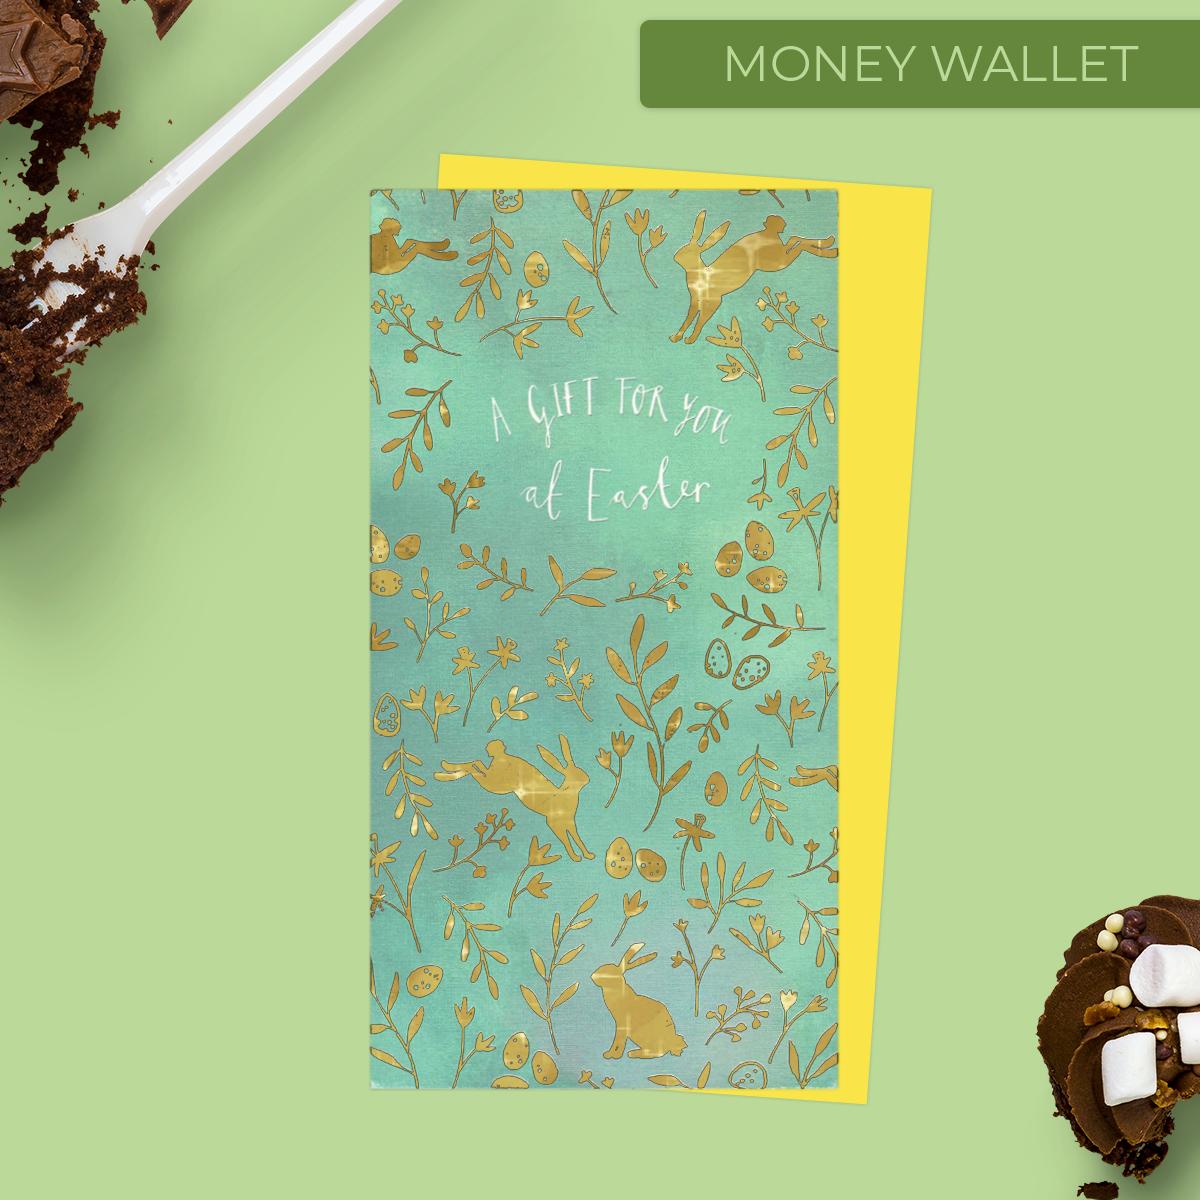 Easter Money Wallet Alongside Its Yellow Envelope